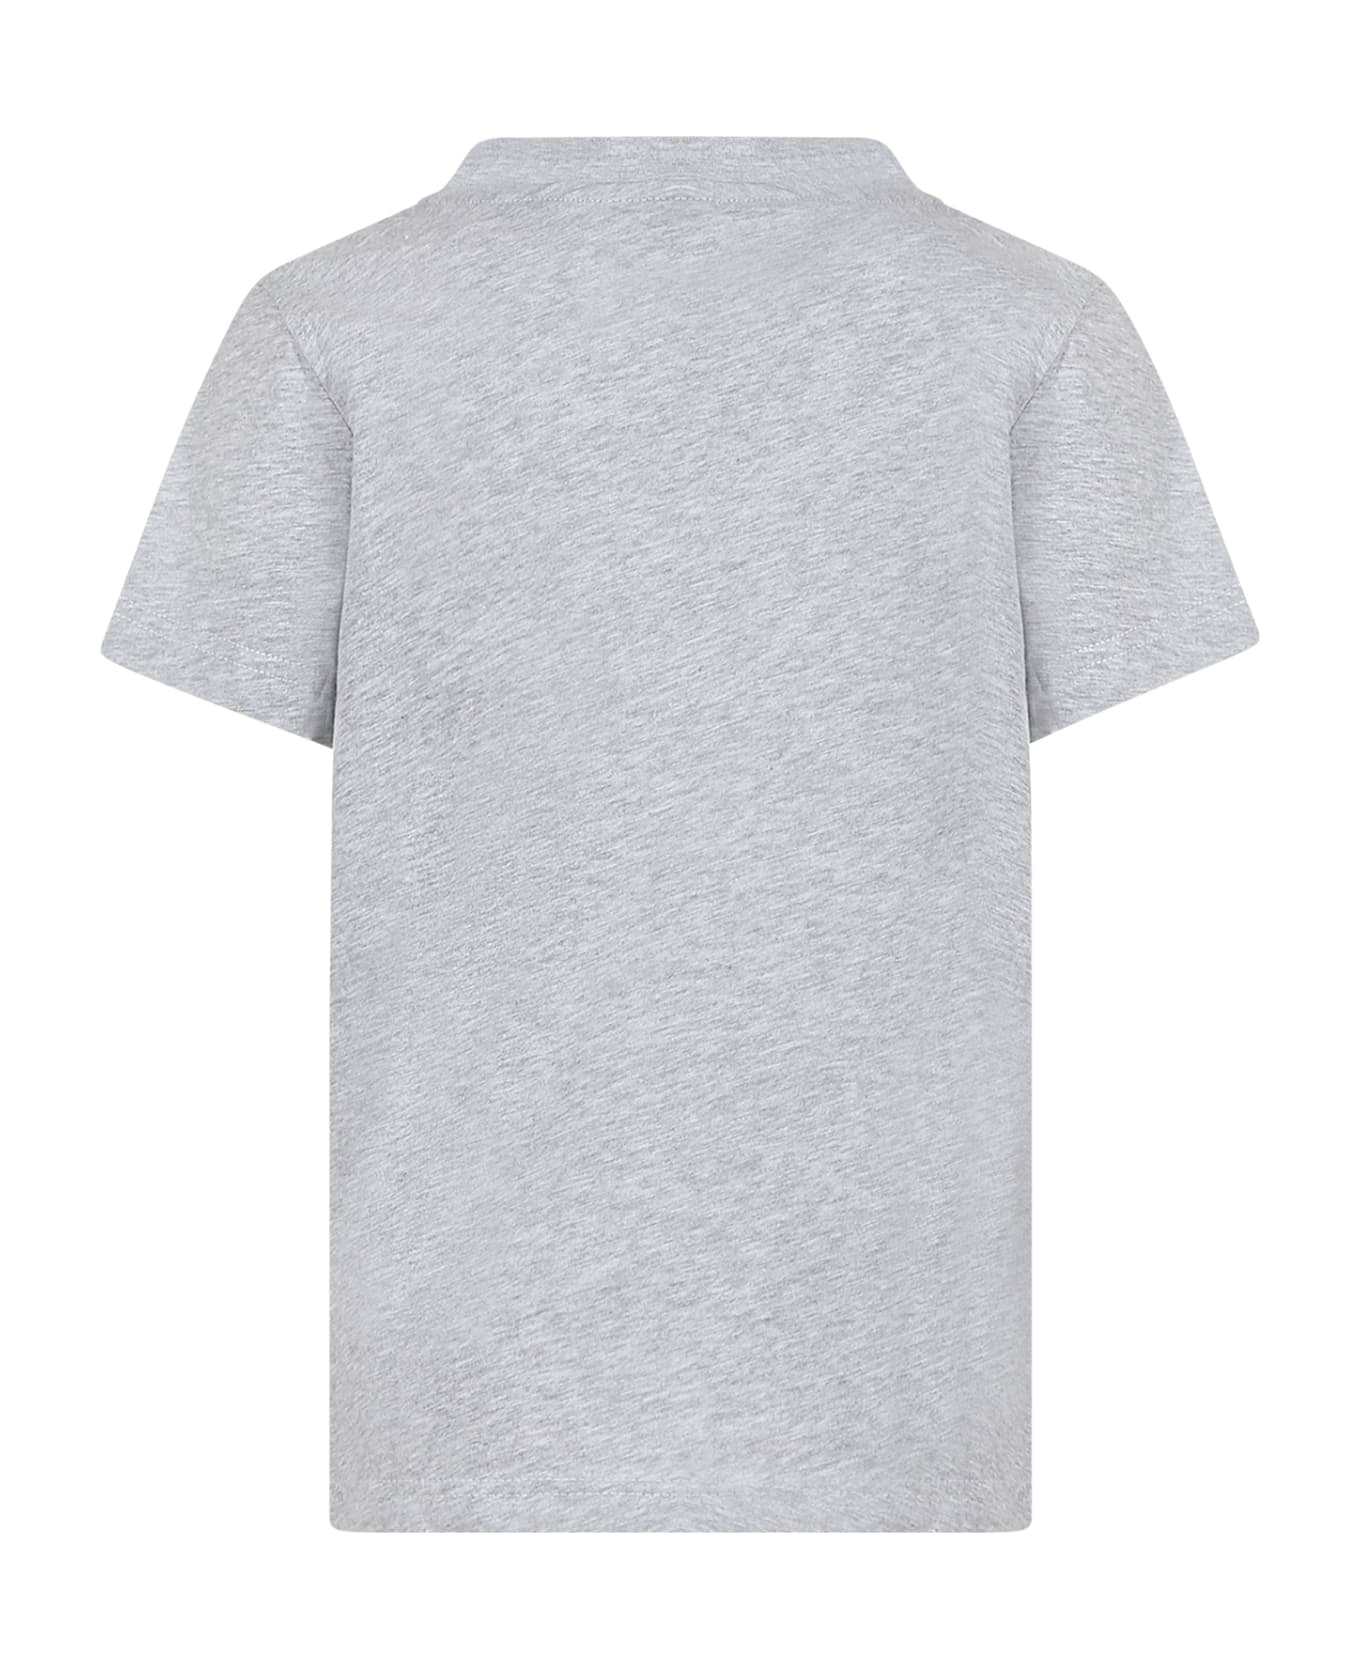 Lacoste Grey T-shirt For Boy With Crocodile - Grey